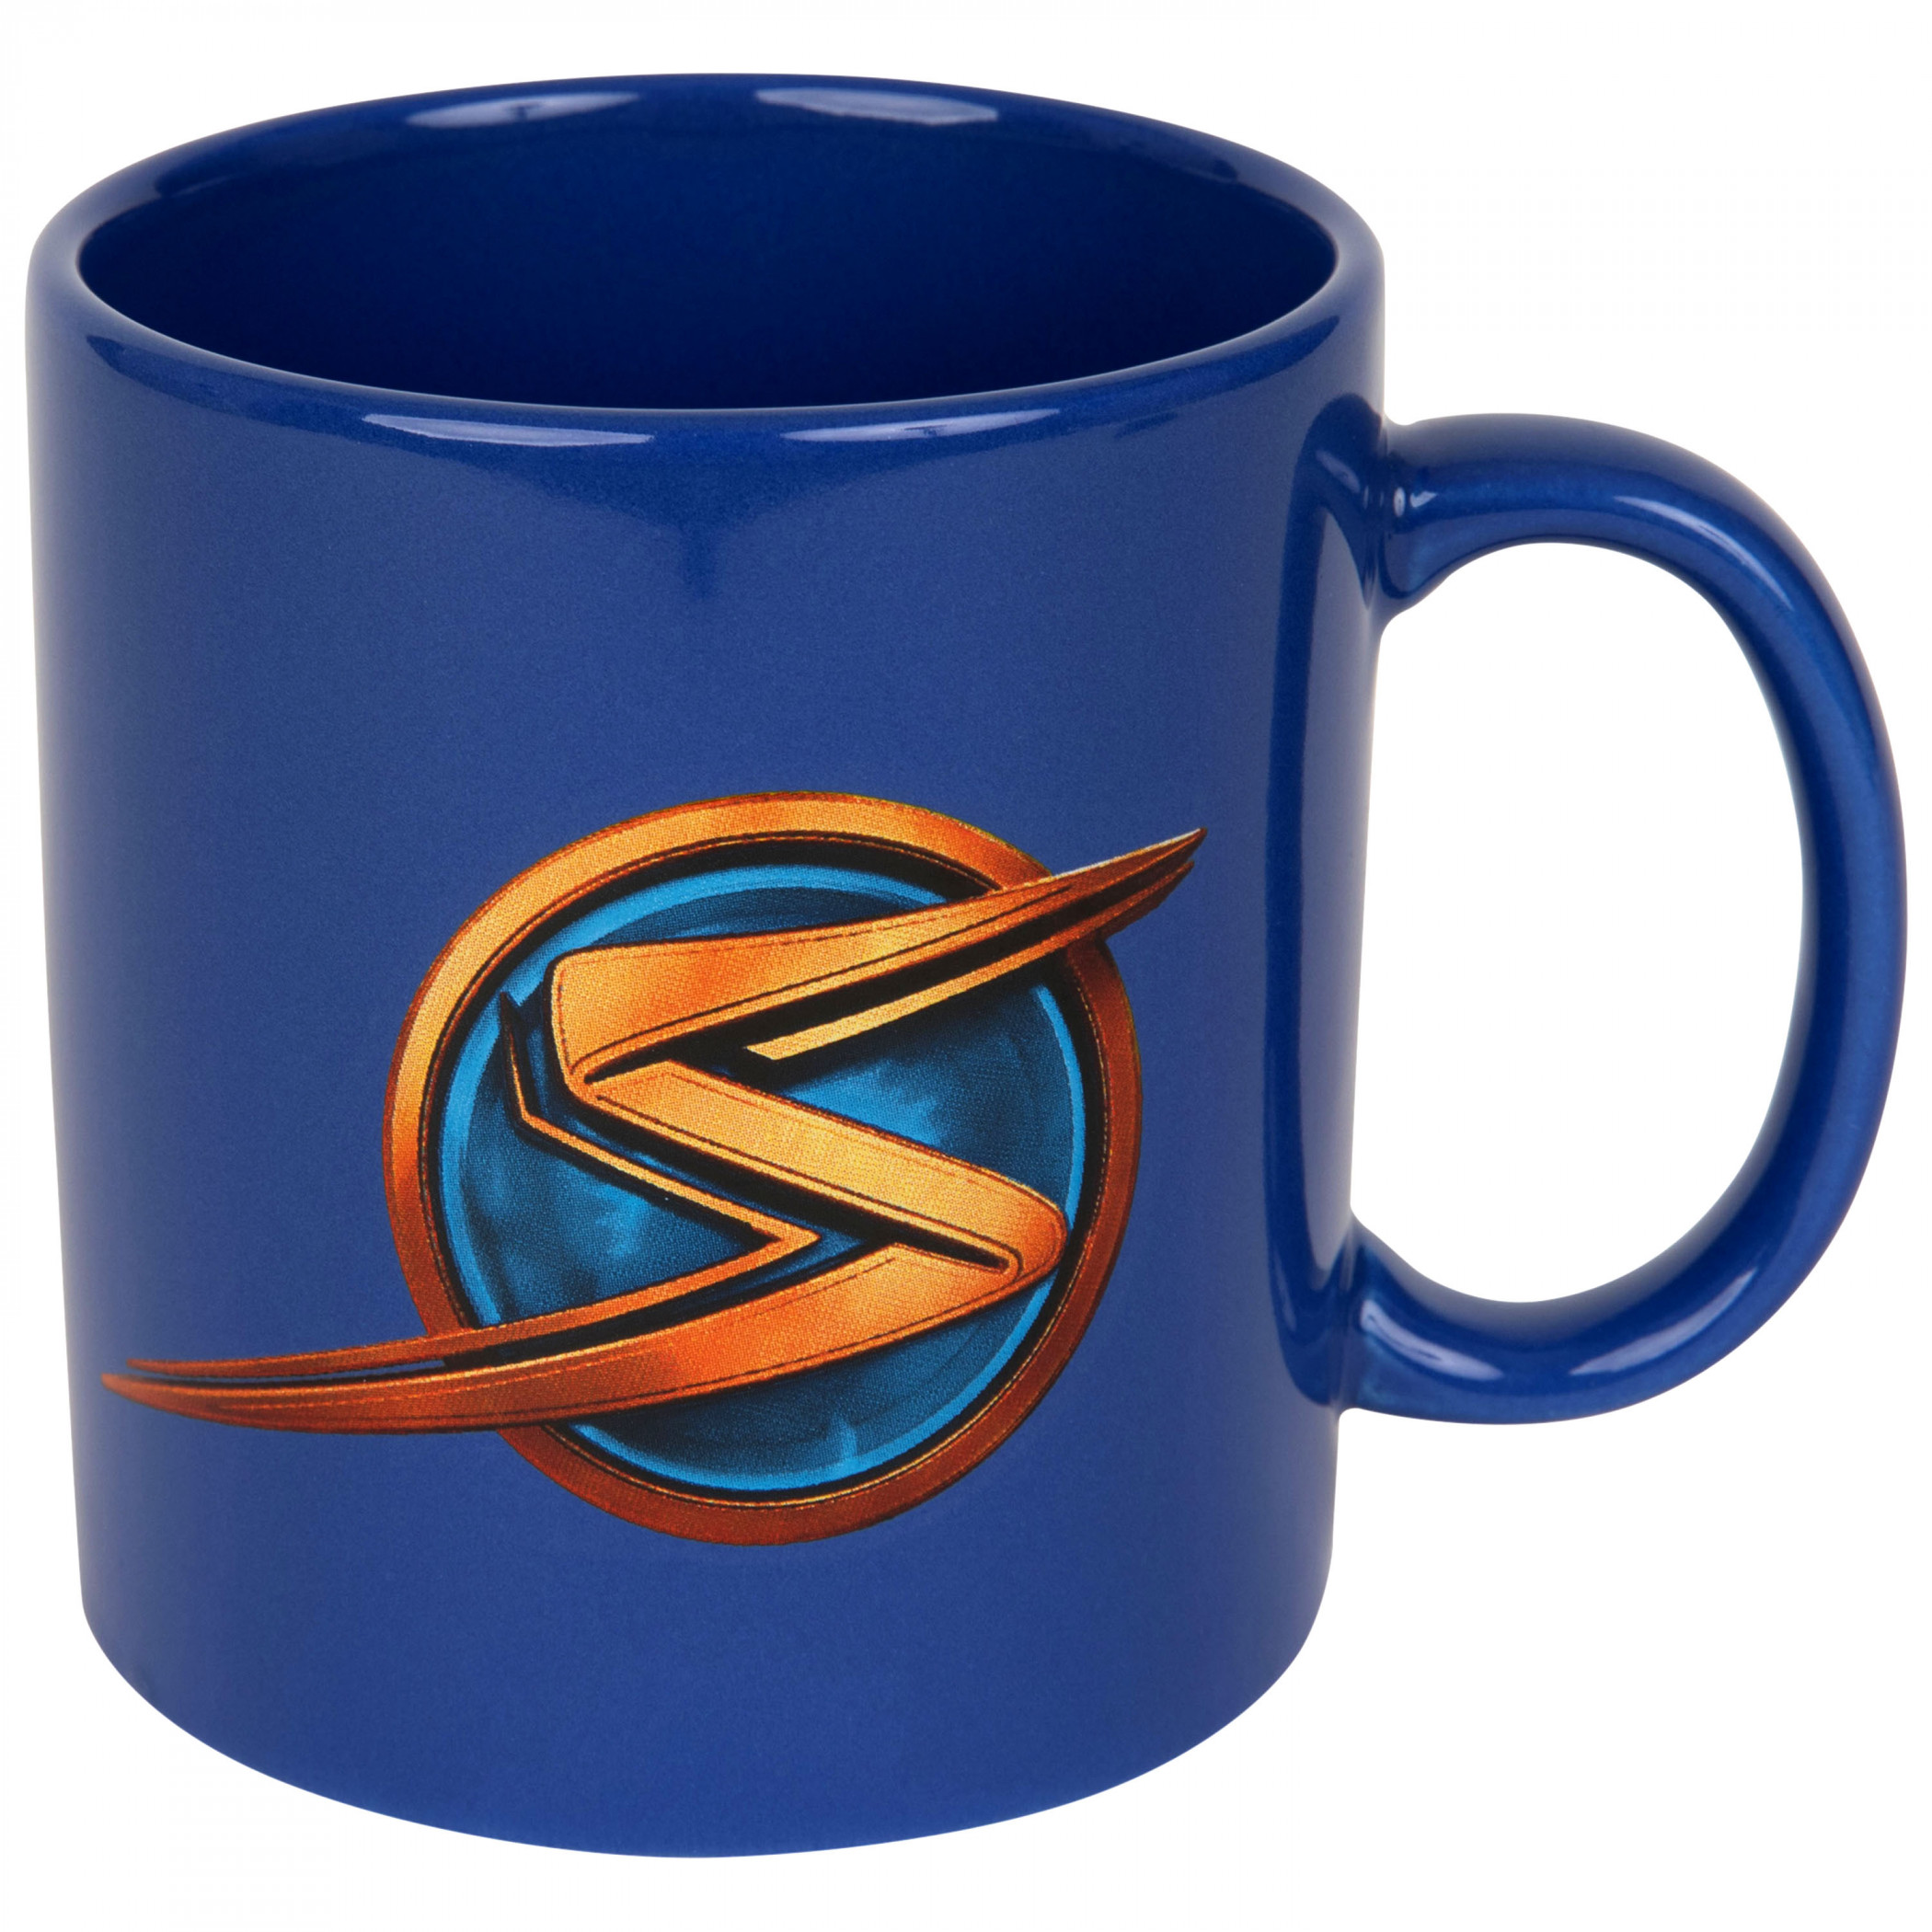 Ms. Marvel Logo and Emblem Coffee Mug